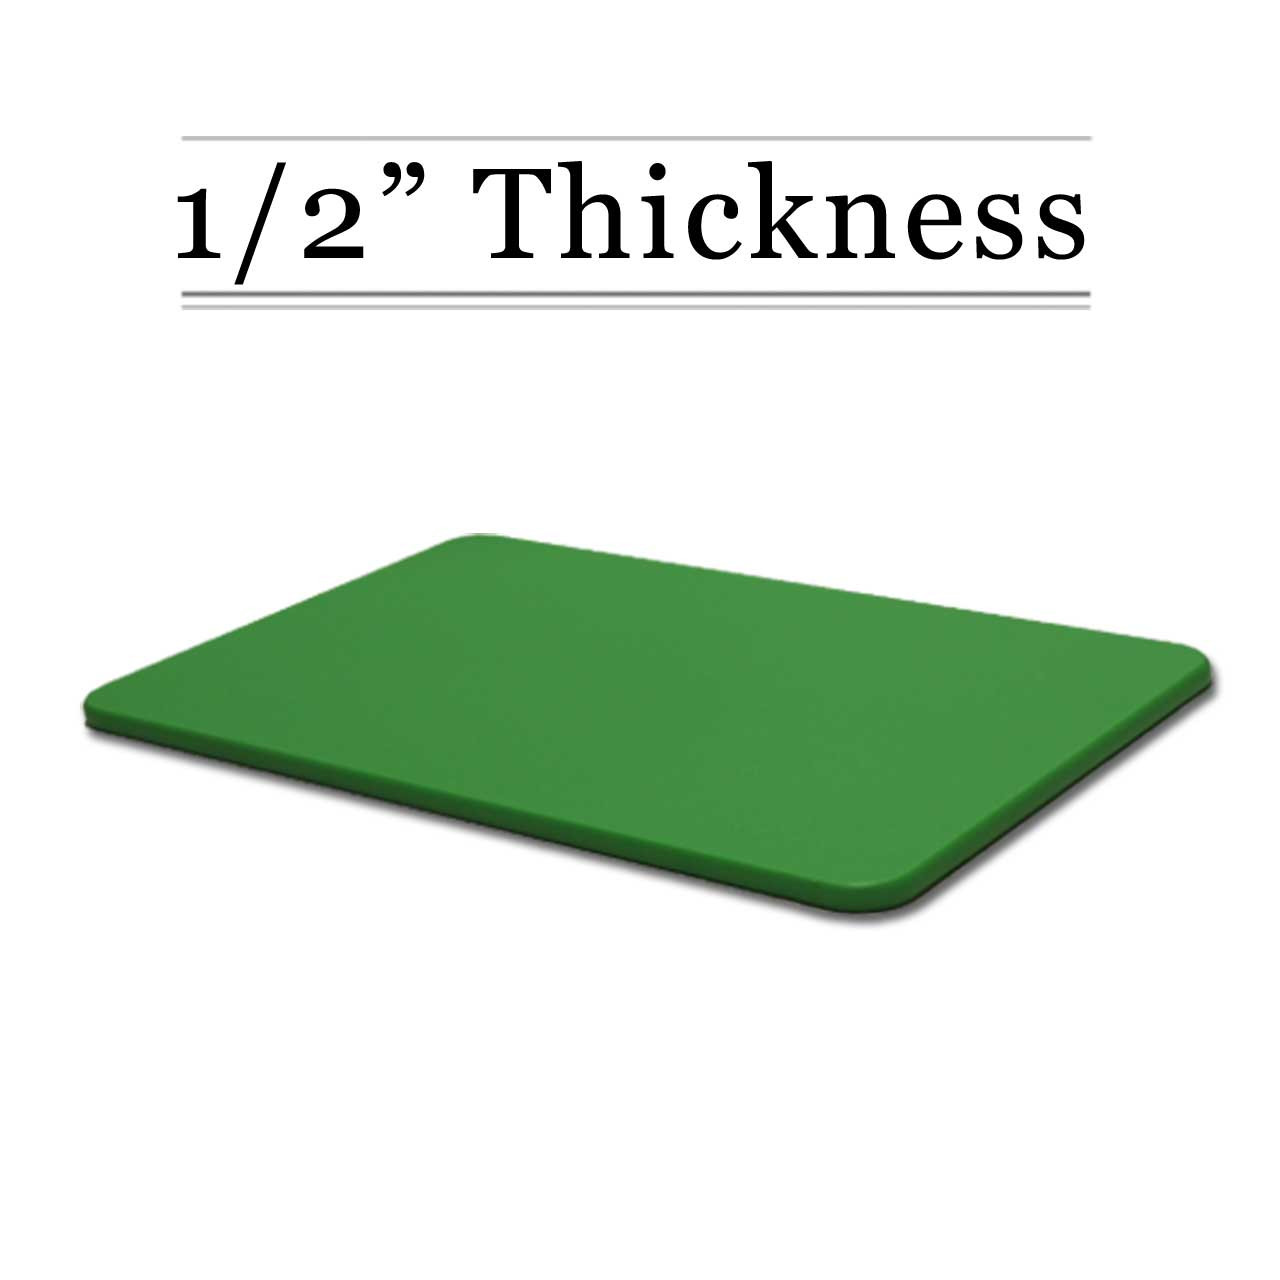 1/2 Thick Green Custom Cutting Board - Cutting Board Company